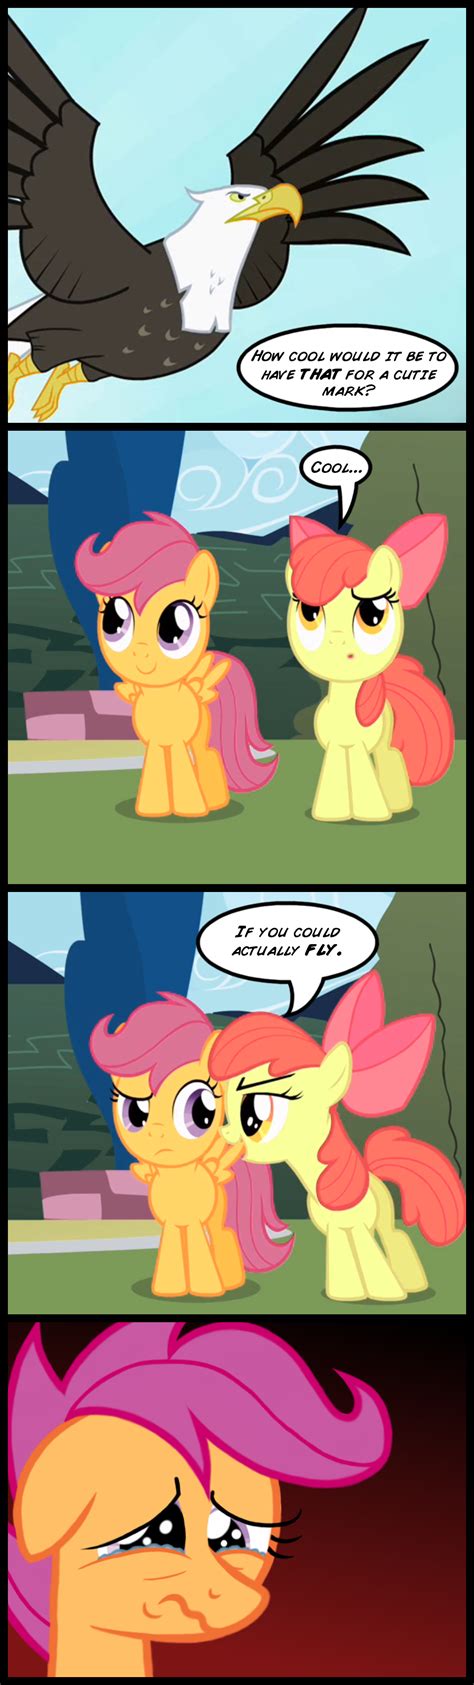 funny   pony friendship  magic   meme